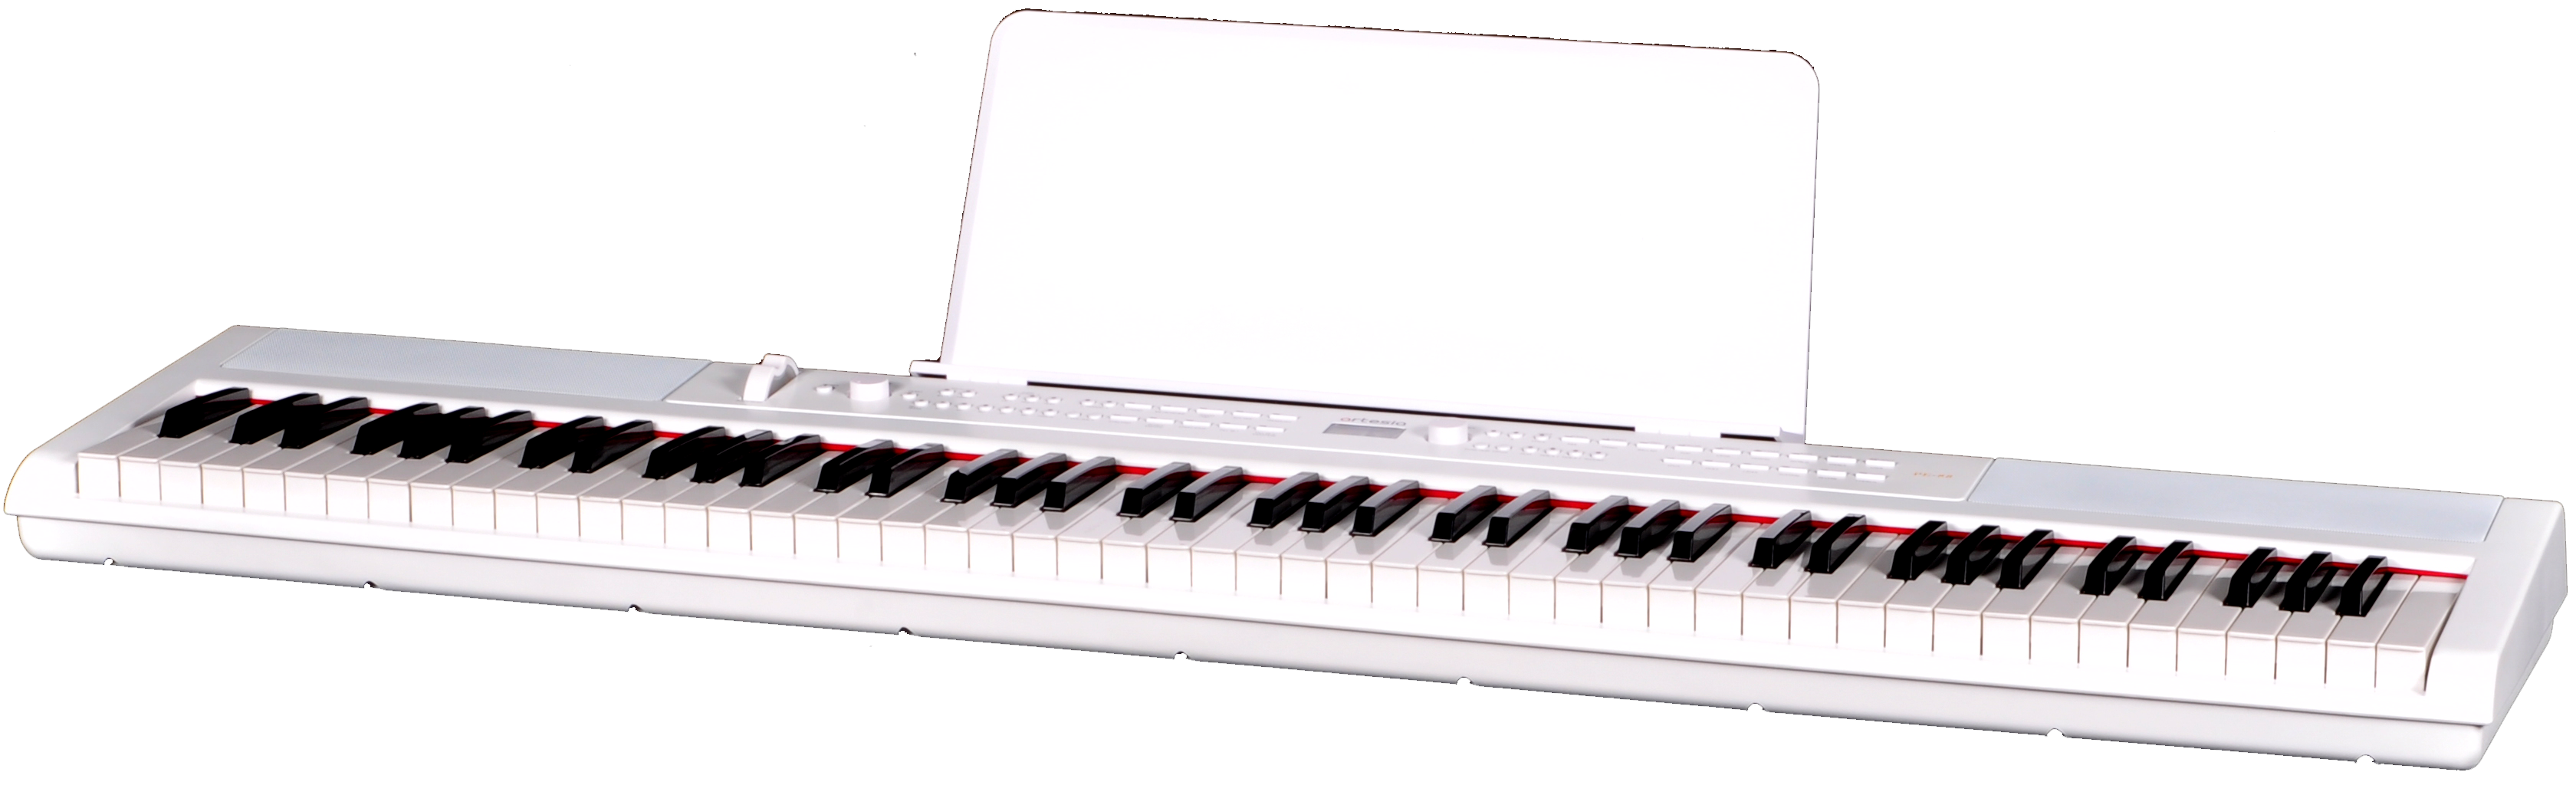 Цифровое пианино Artesia PE-88, EU - фото №1